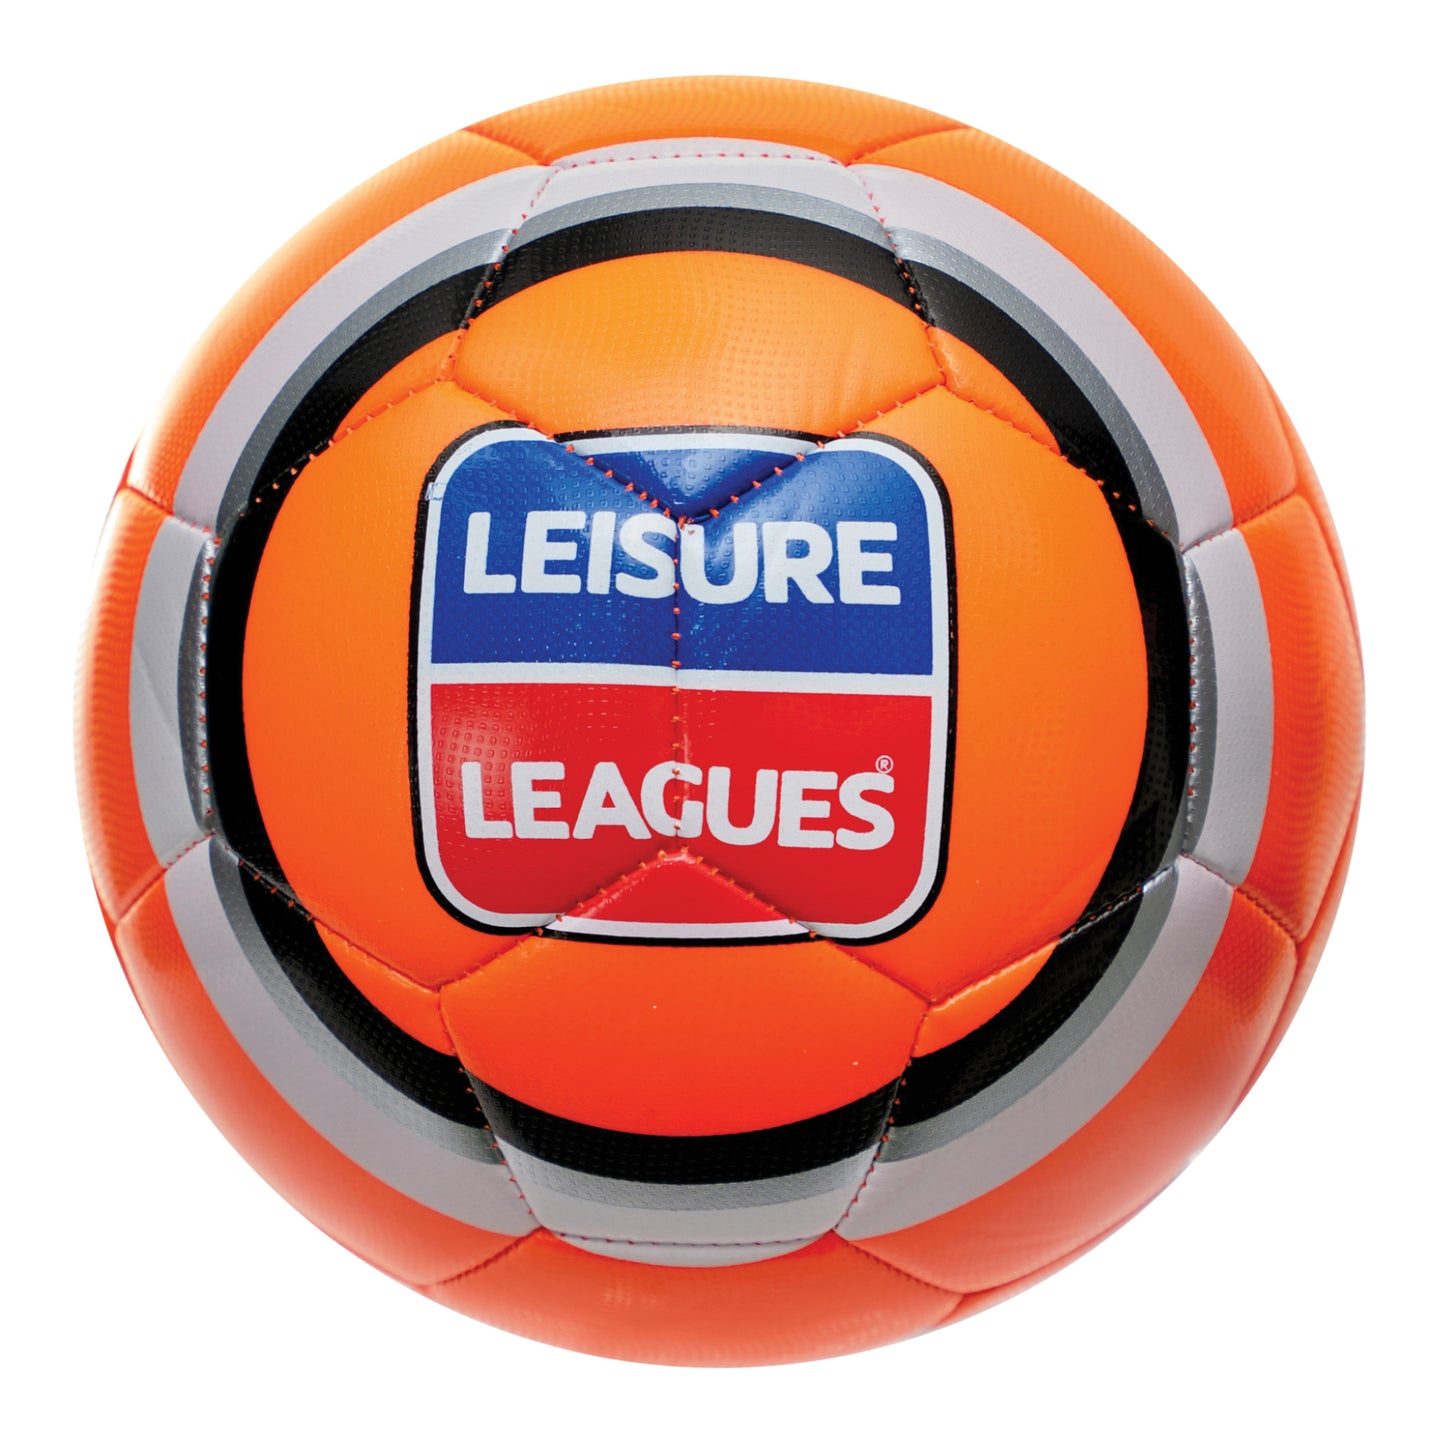 Leisure leagues football Size 5 Football Orange